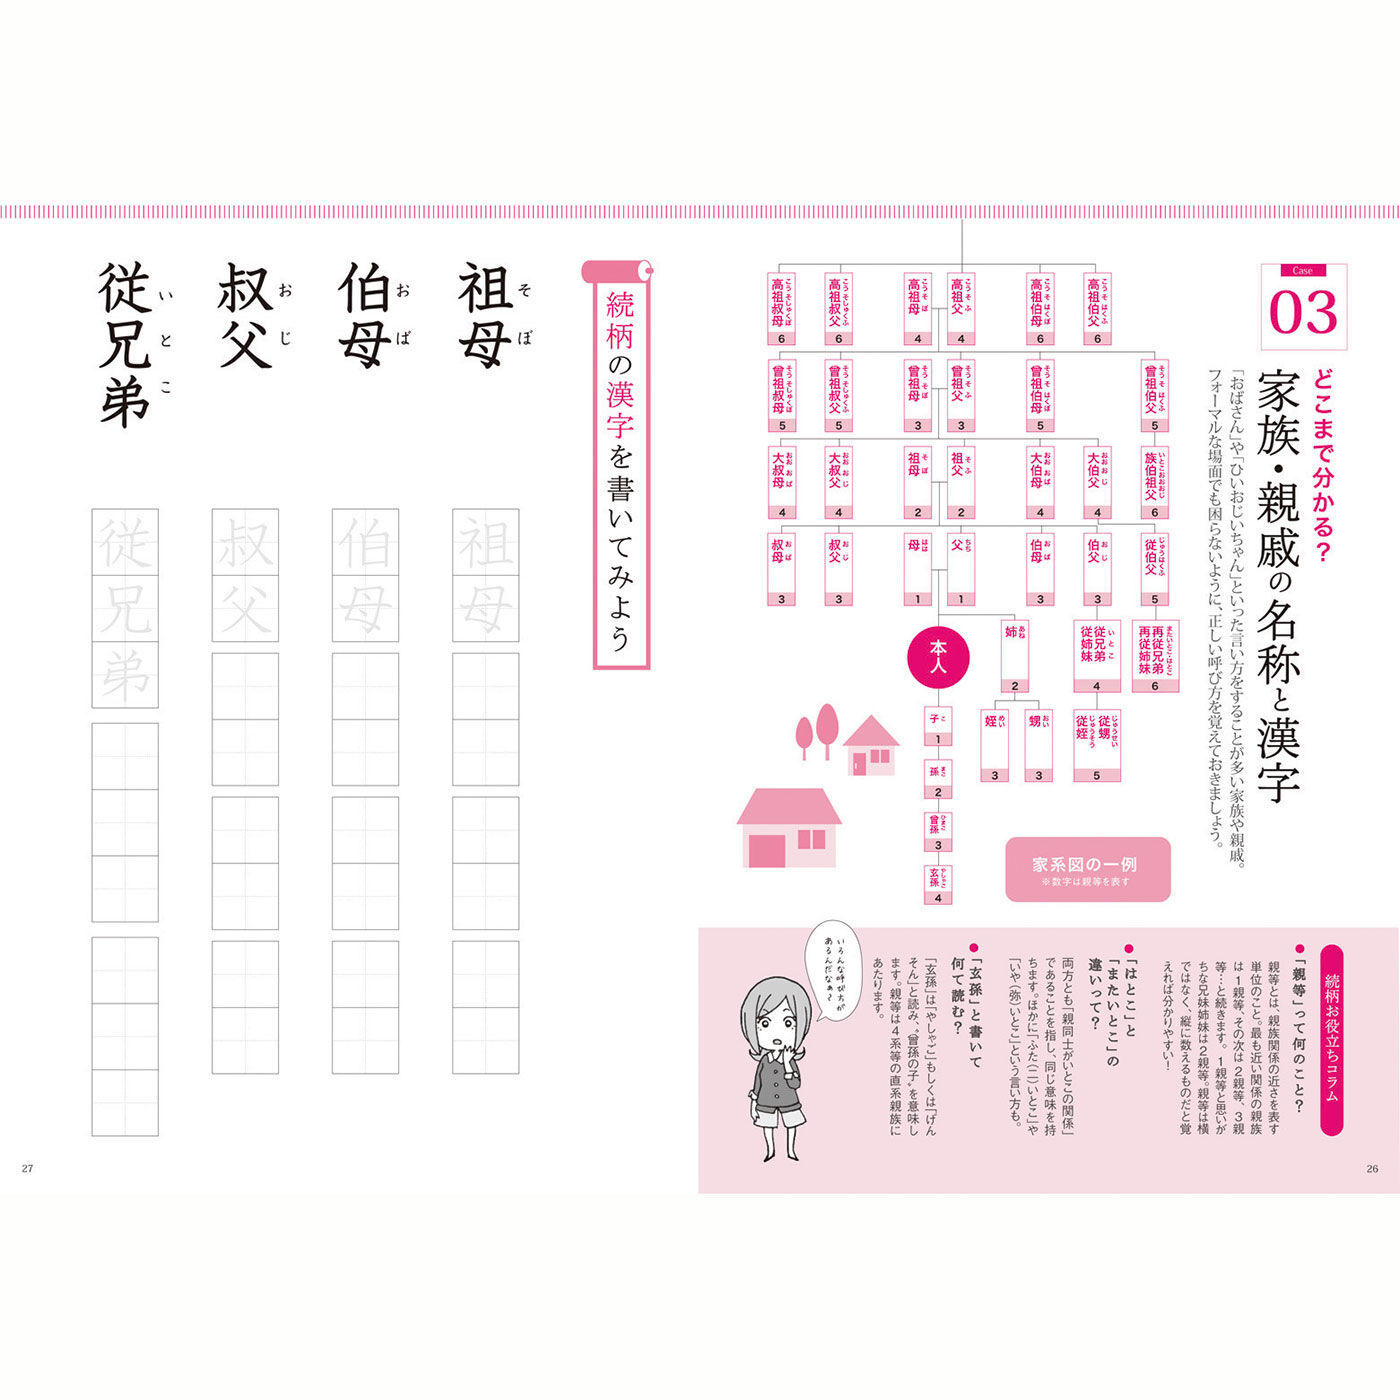 Real Stock|漢字の無理なく楽しい覚え方　漢字となかよくなるプログラム|これは〈1. 自宅で家族団らんを楽しむとき〉です。